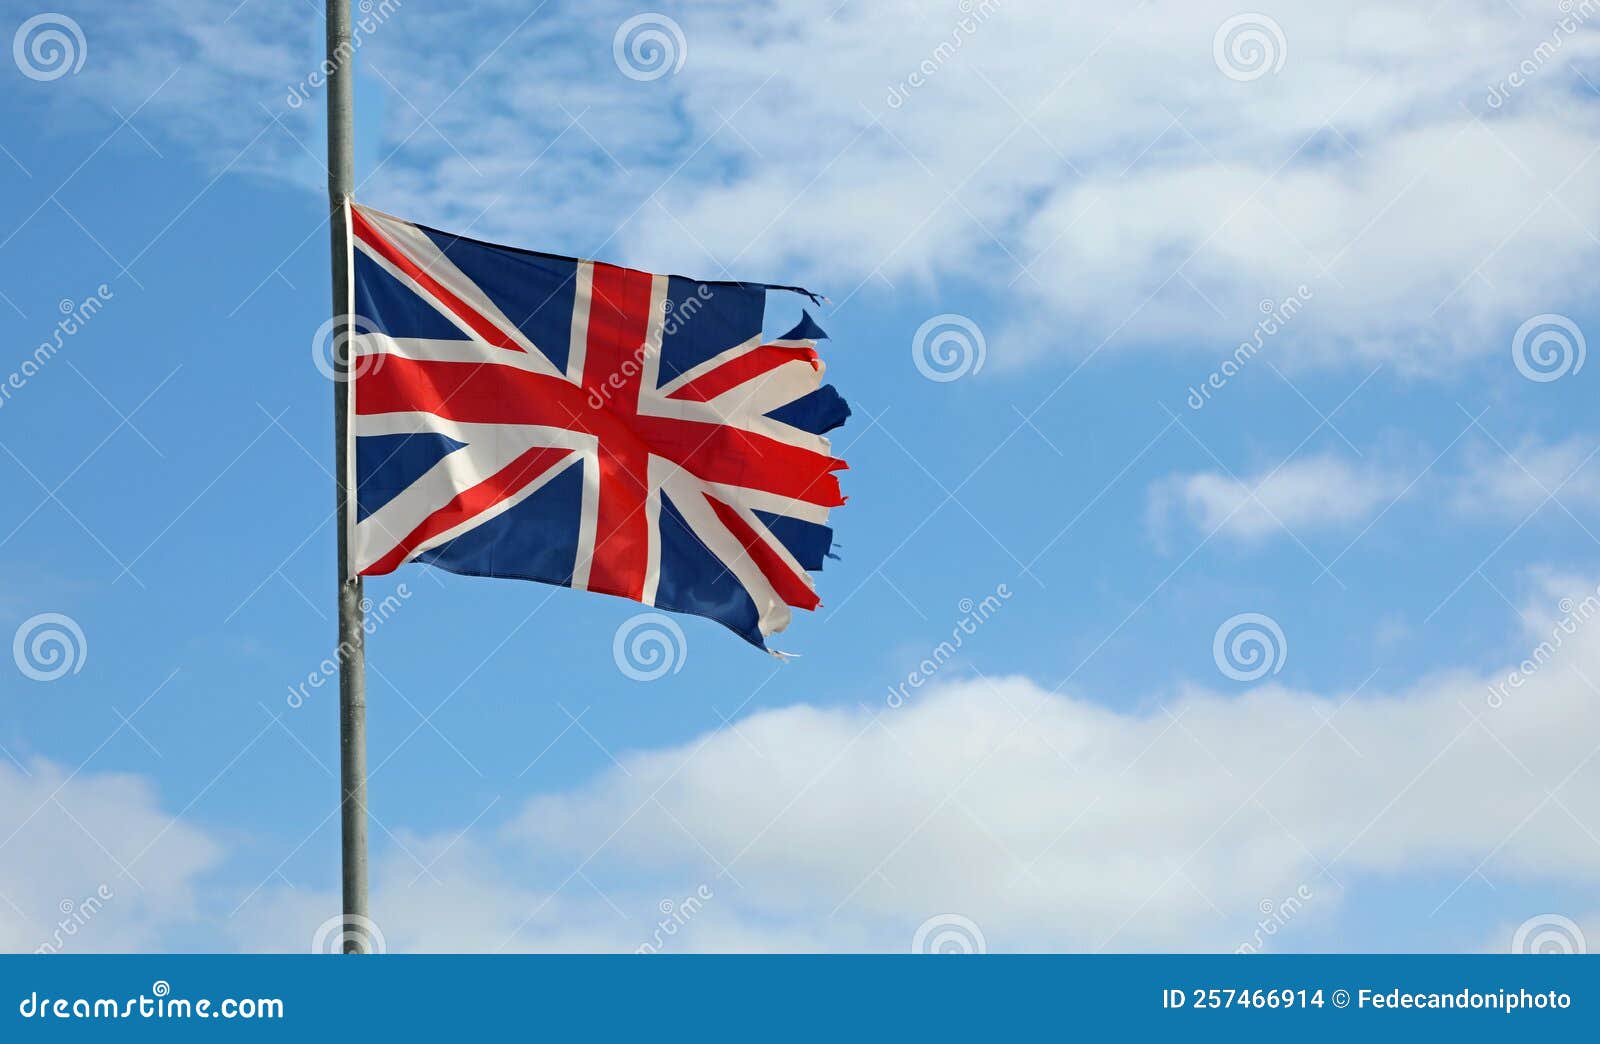 frayed english flag at half mast